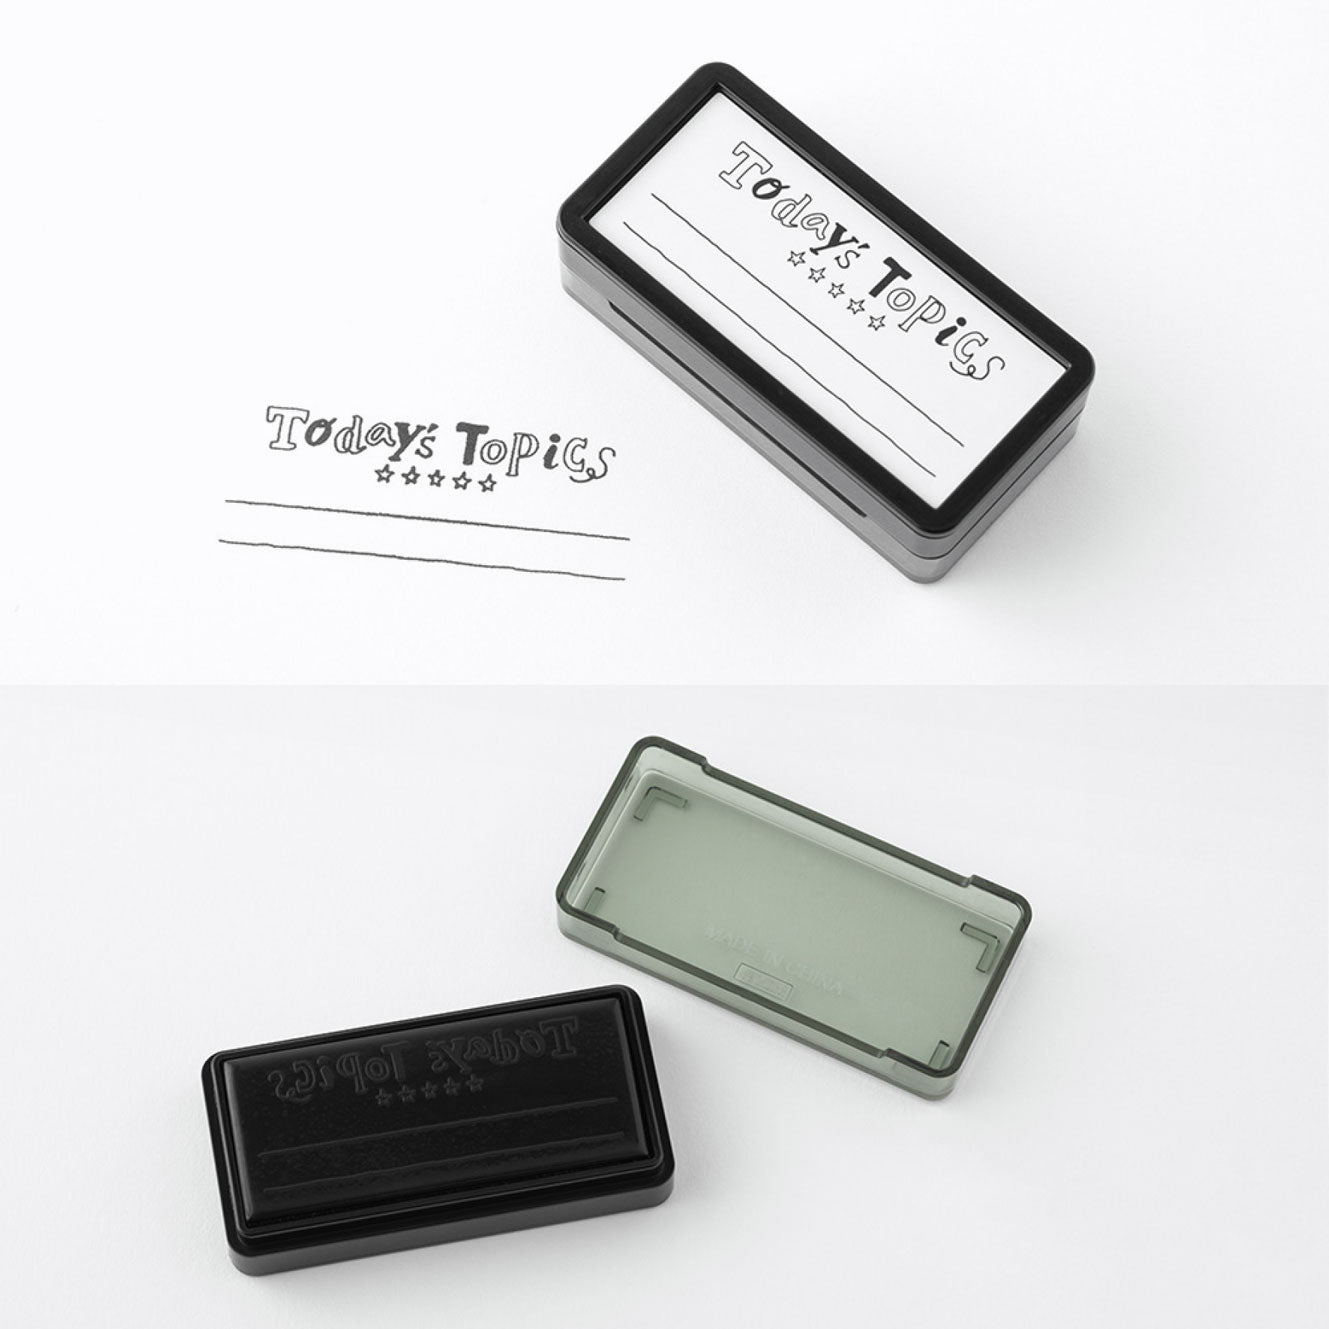 Midori - Stamp - Self-Inking Mini - Today's Topics